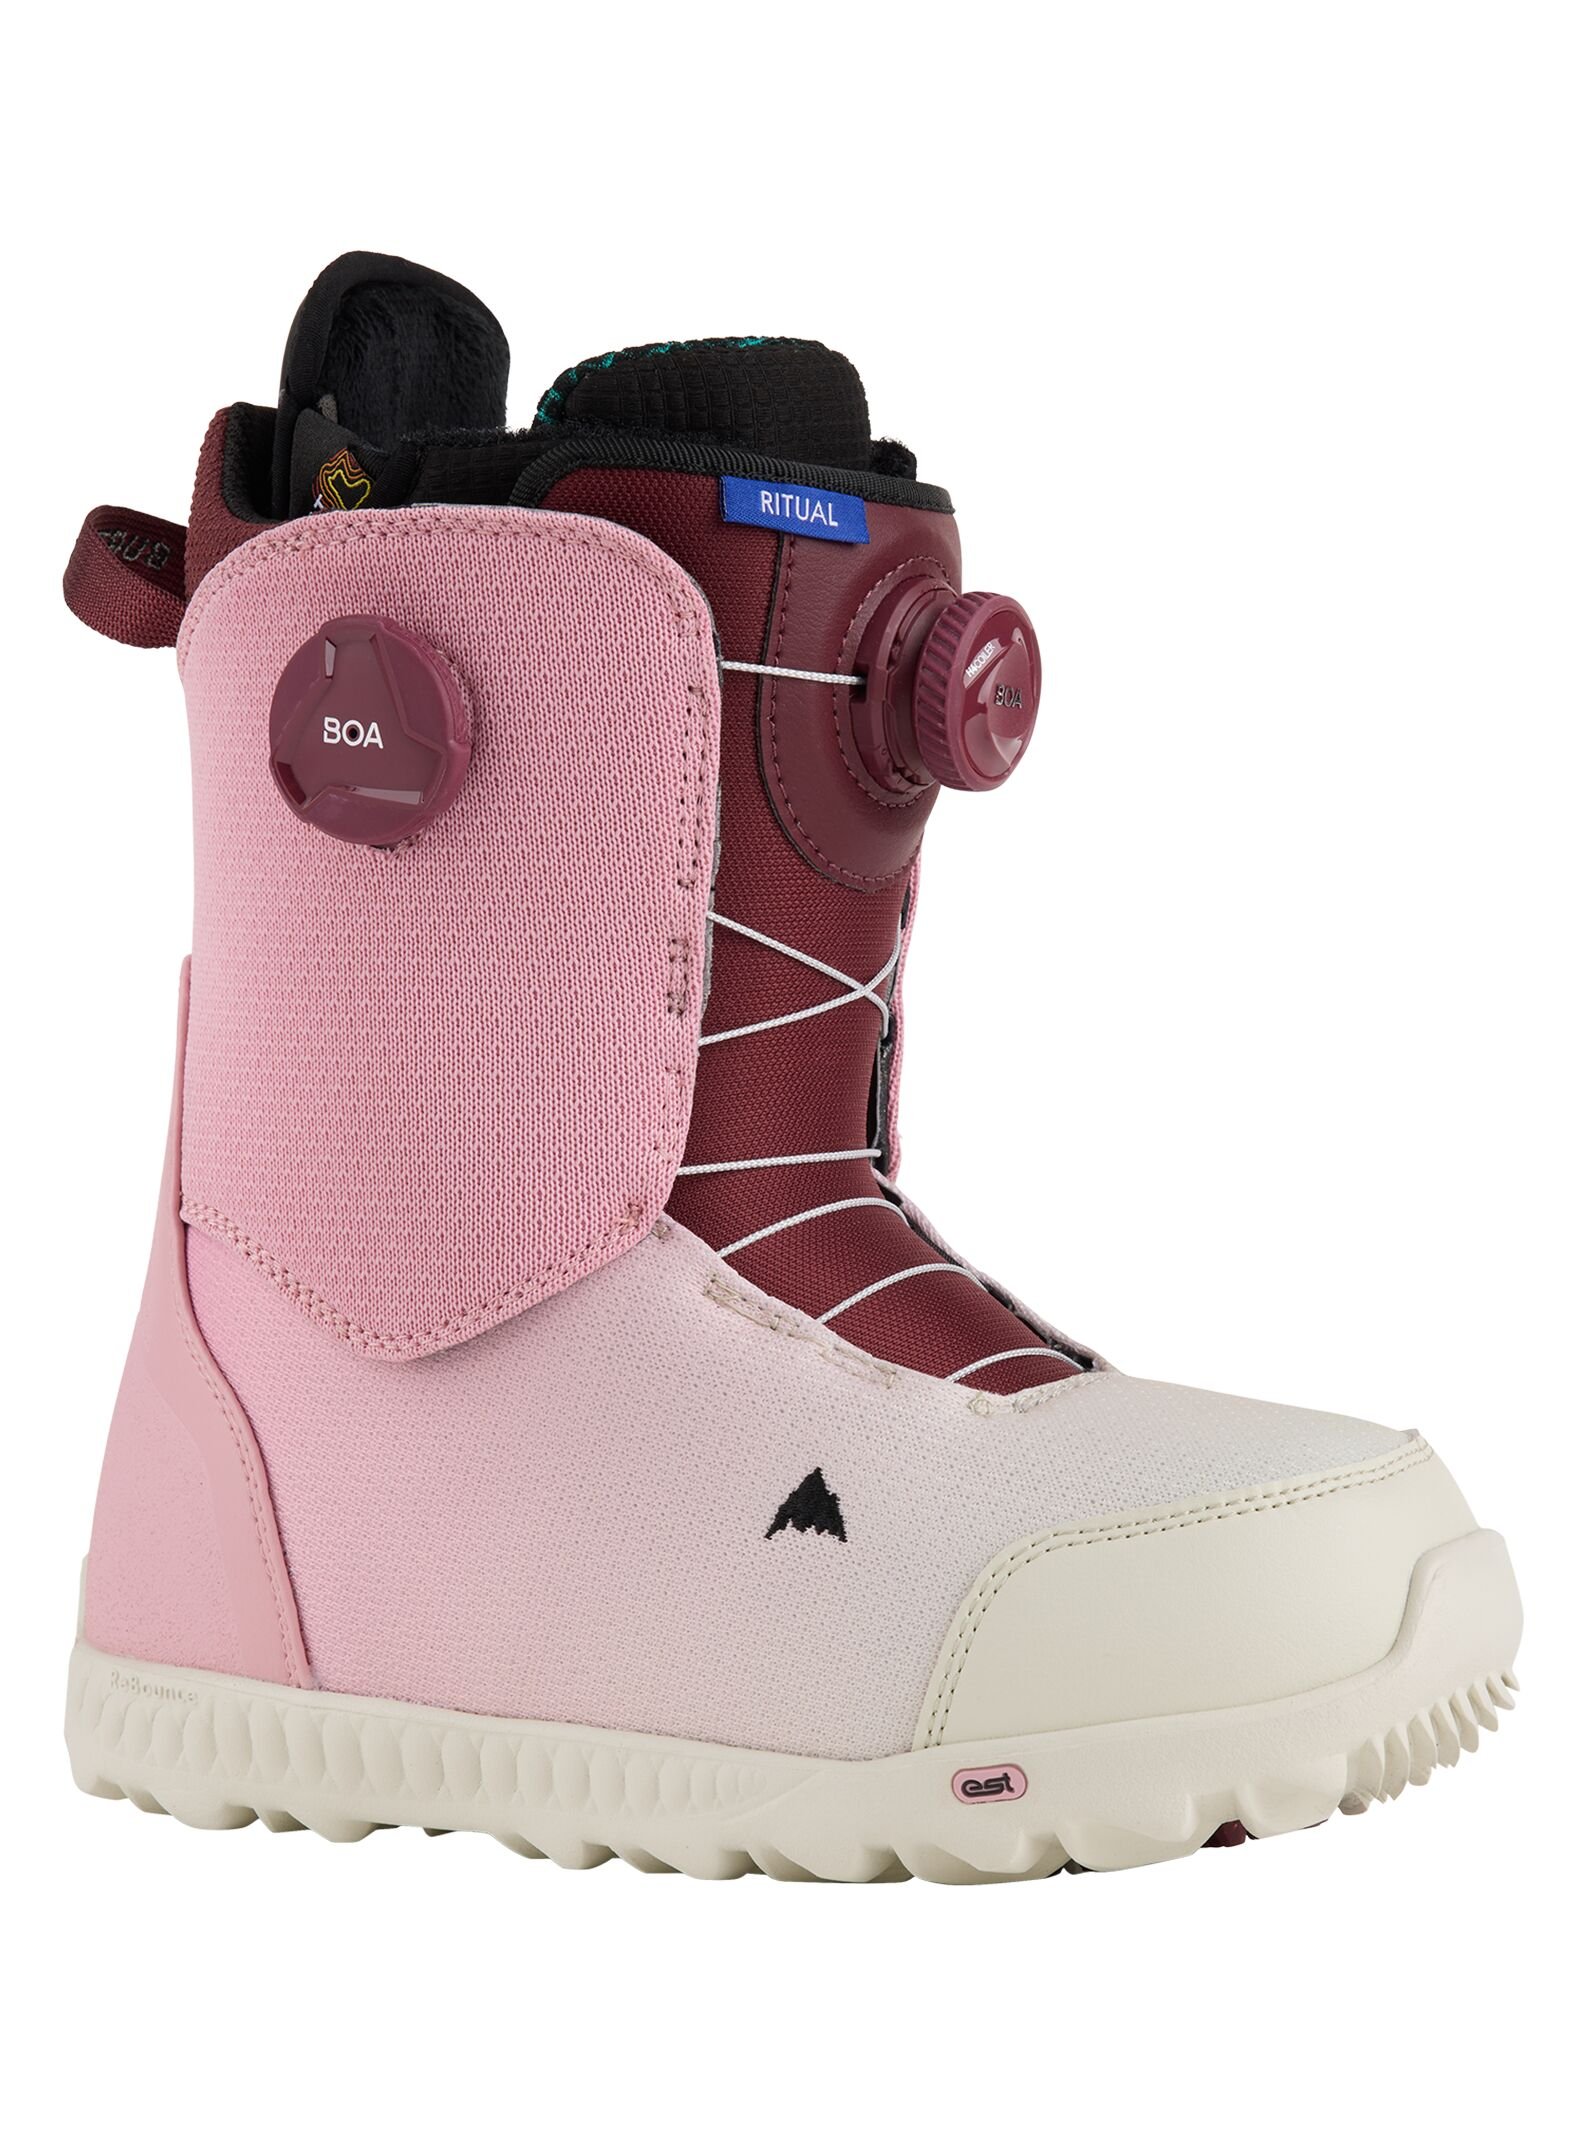 Men’s Photon BOA®︎ Snowboard Boots